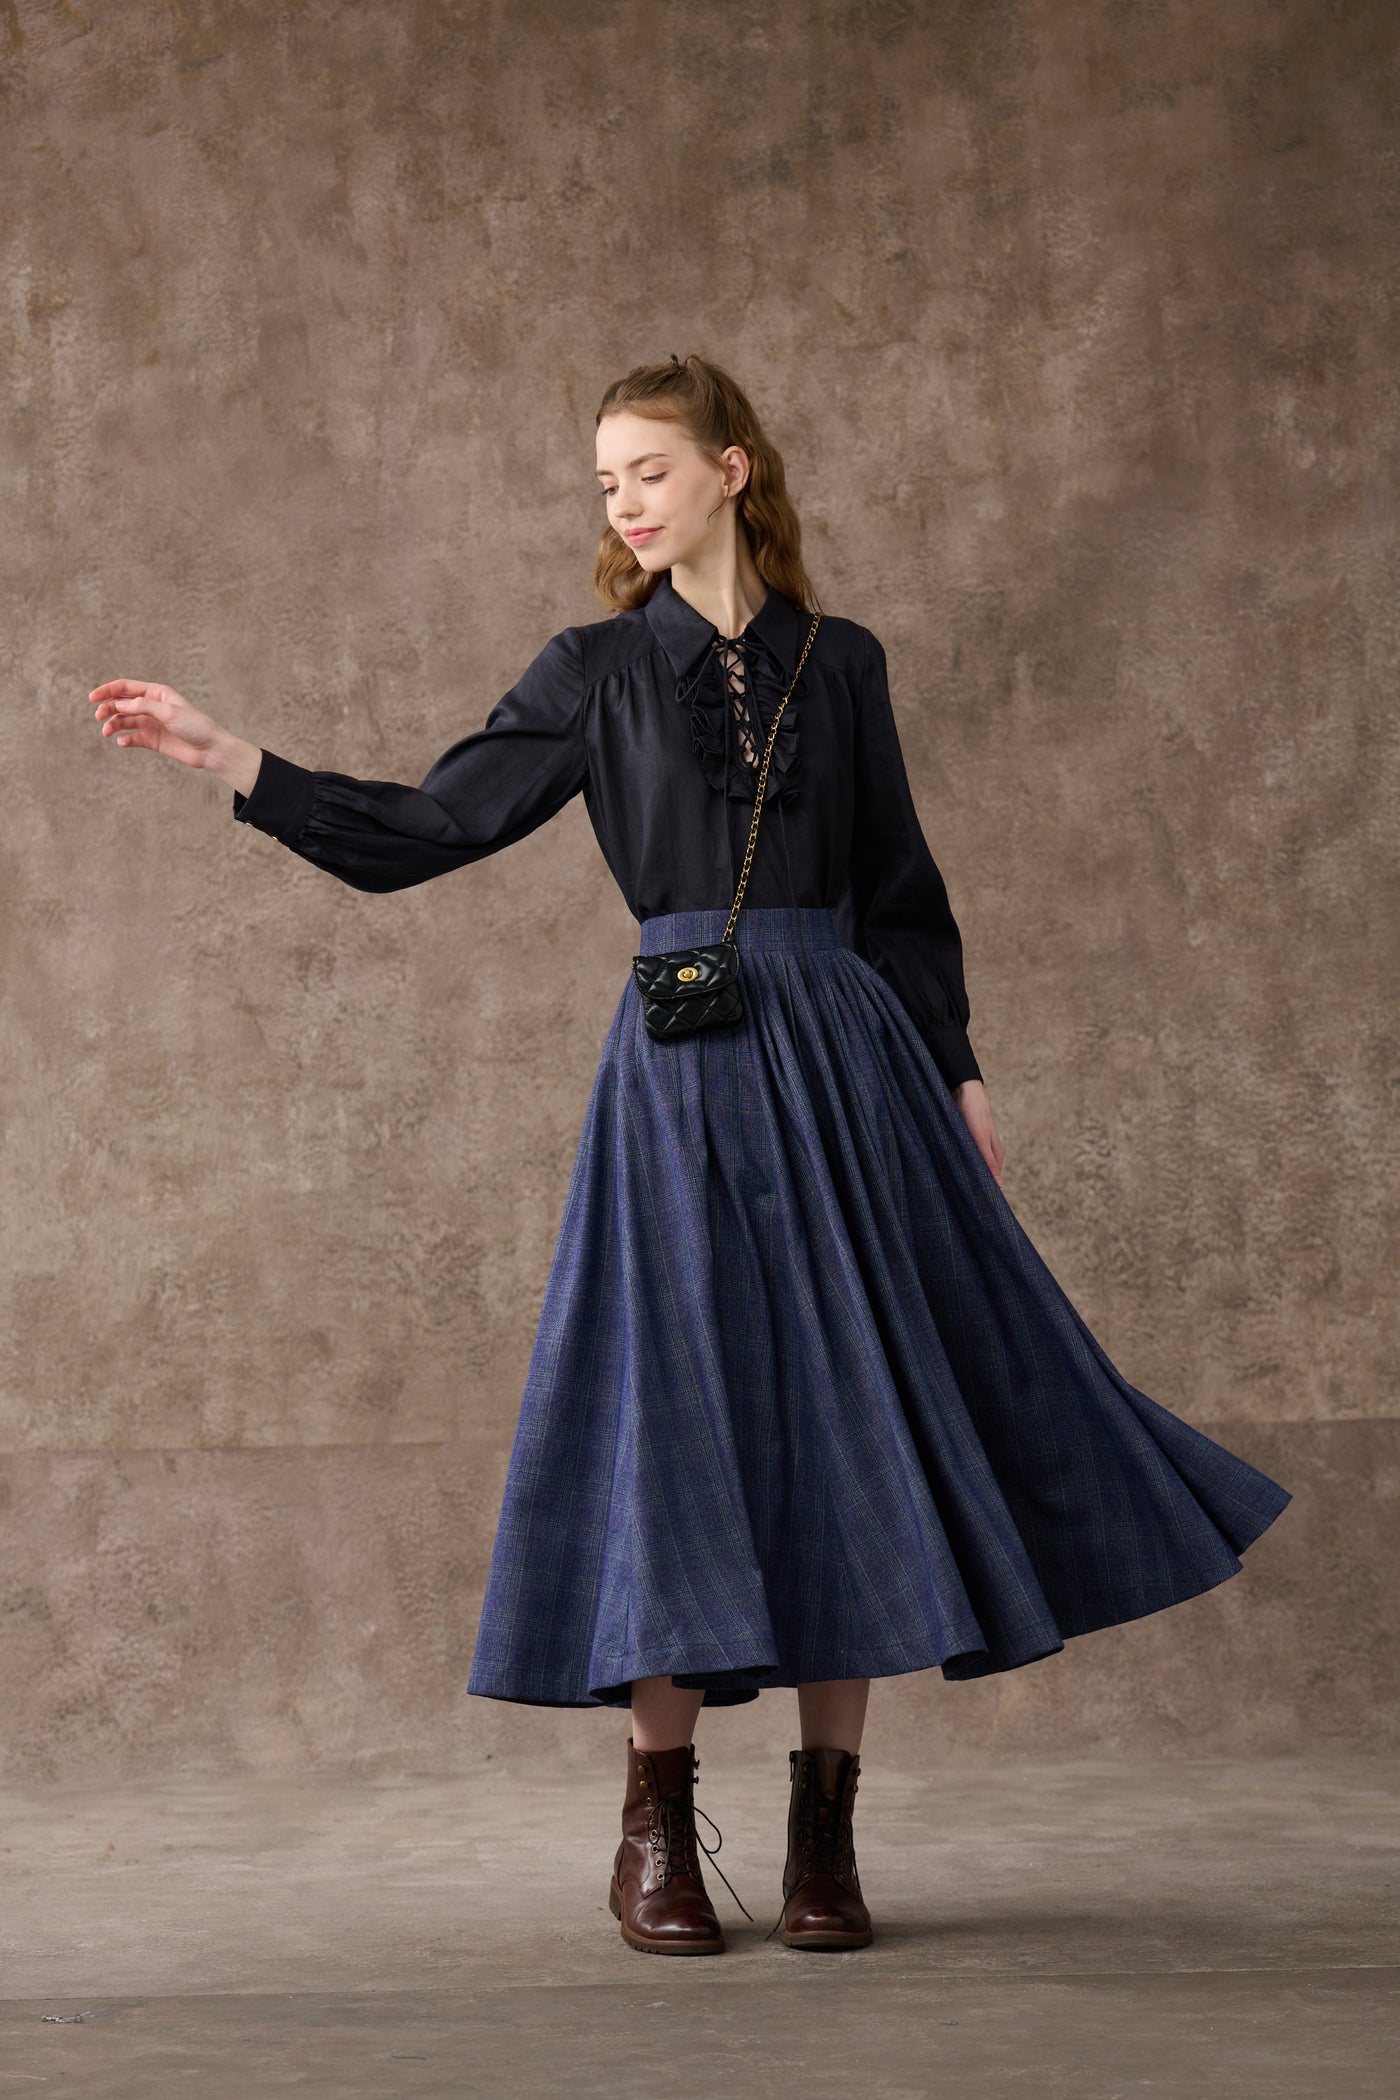 Future 4 | Tartan Wool Skirt in Blue